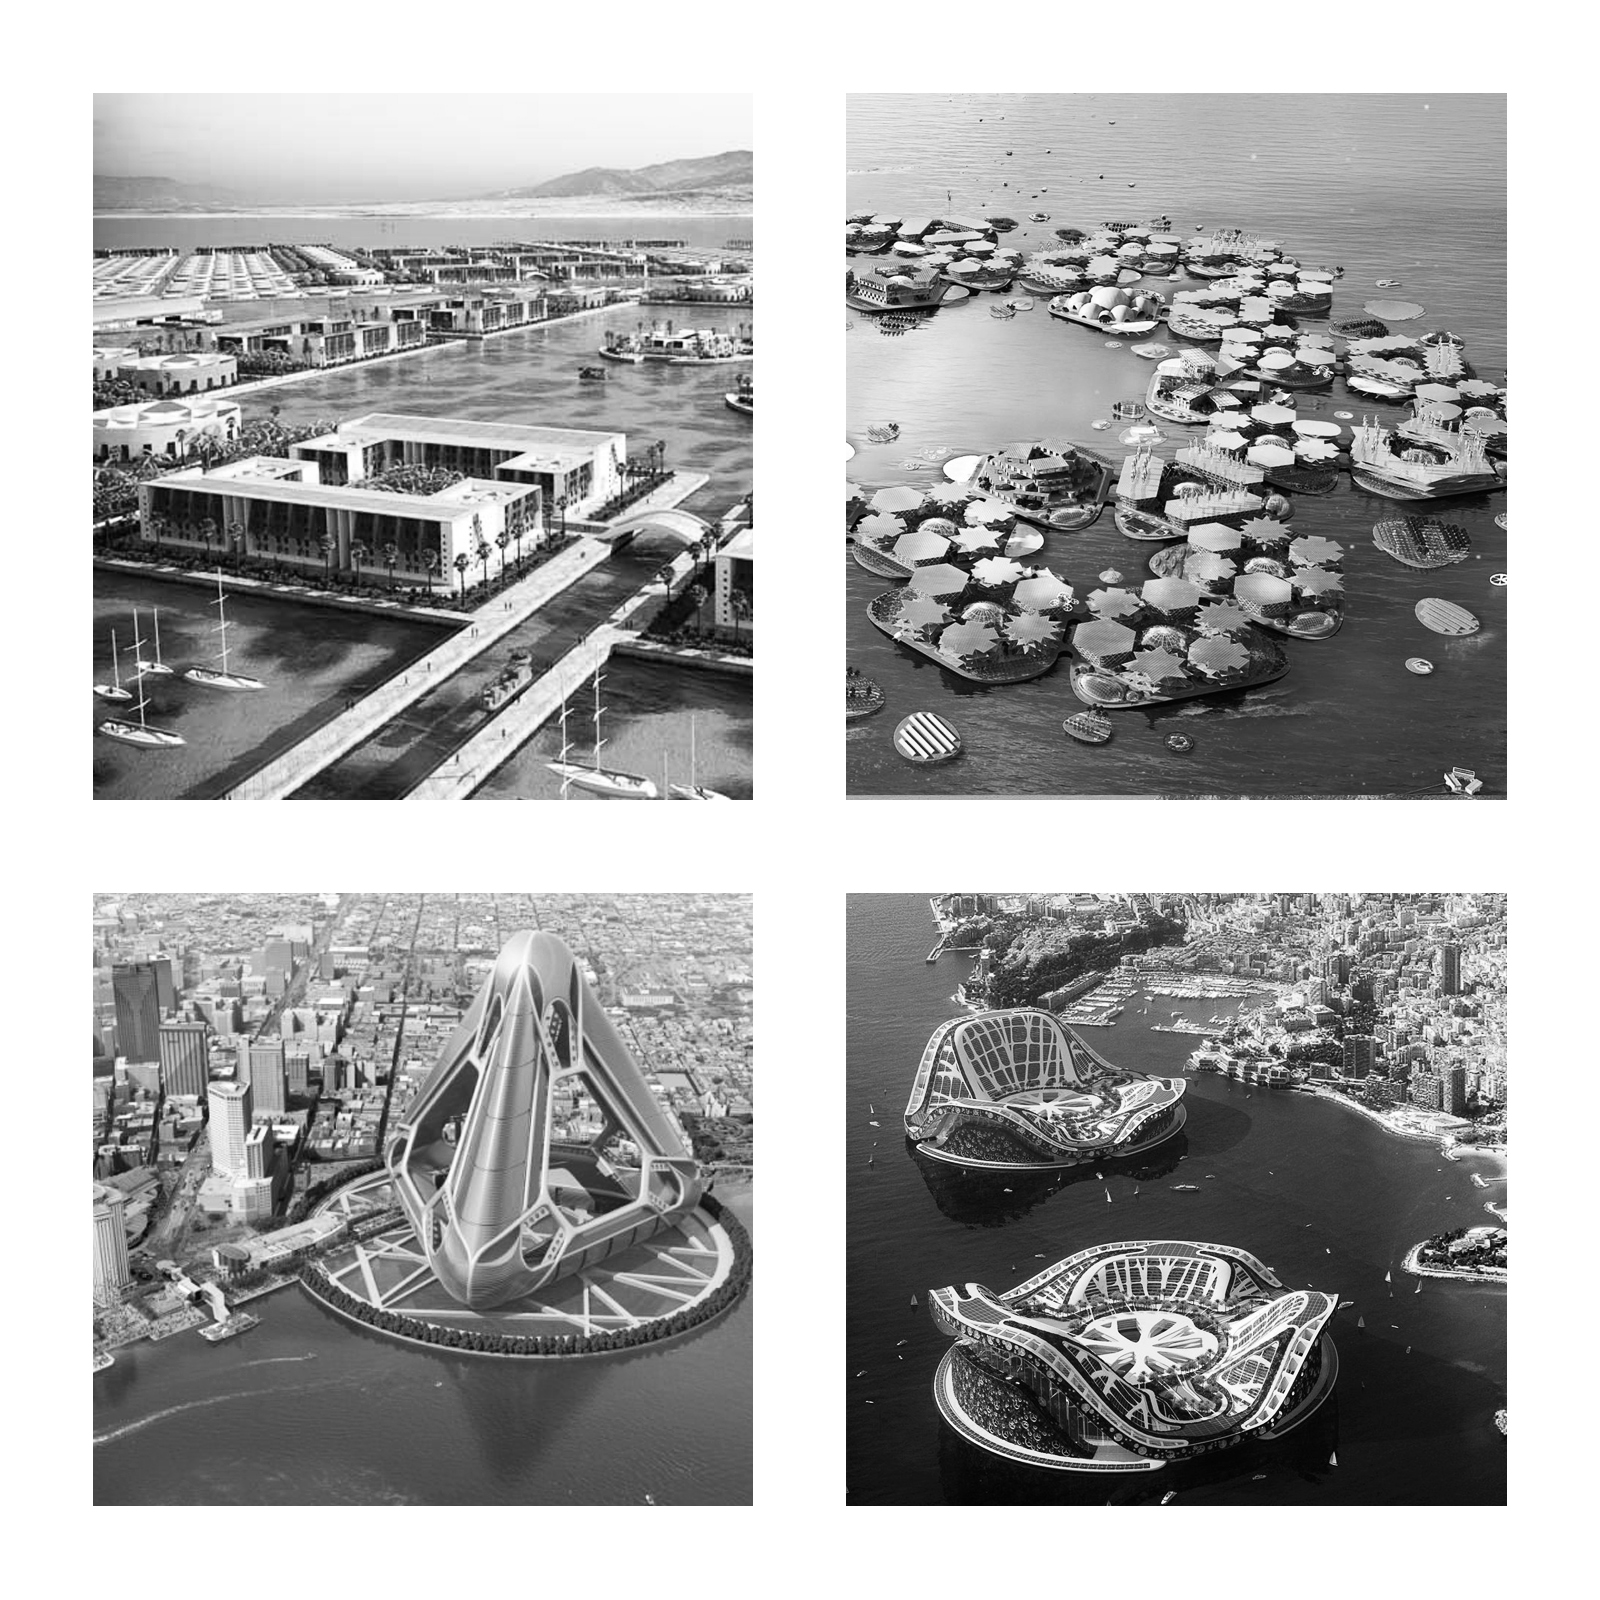 Archisearch Υδάτινες Αστικές Επεκτάσεις: από το παρελθόν στο μέλλον | Ερευνητική εργασία από την Σίσσυ Θεοδωροπούλου και την Σοφία Κουρτίδου